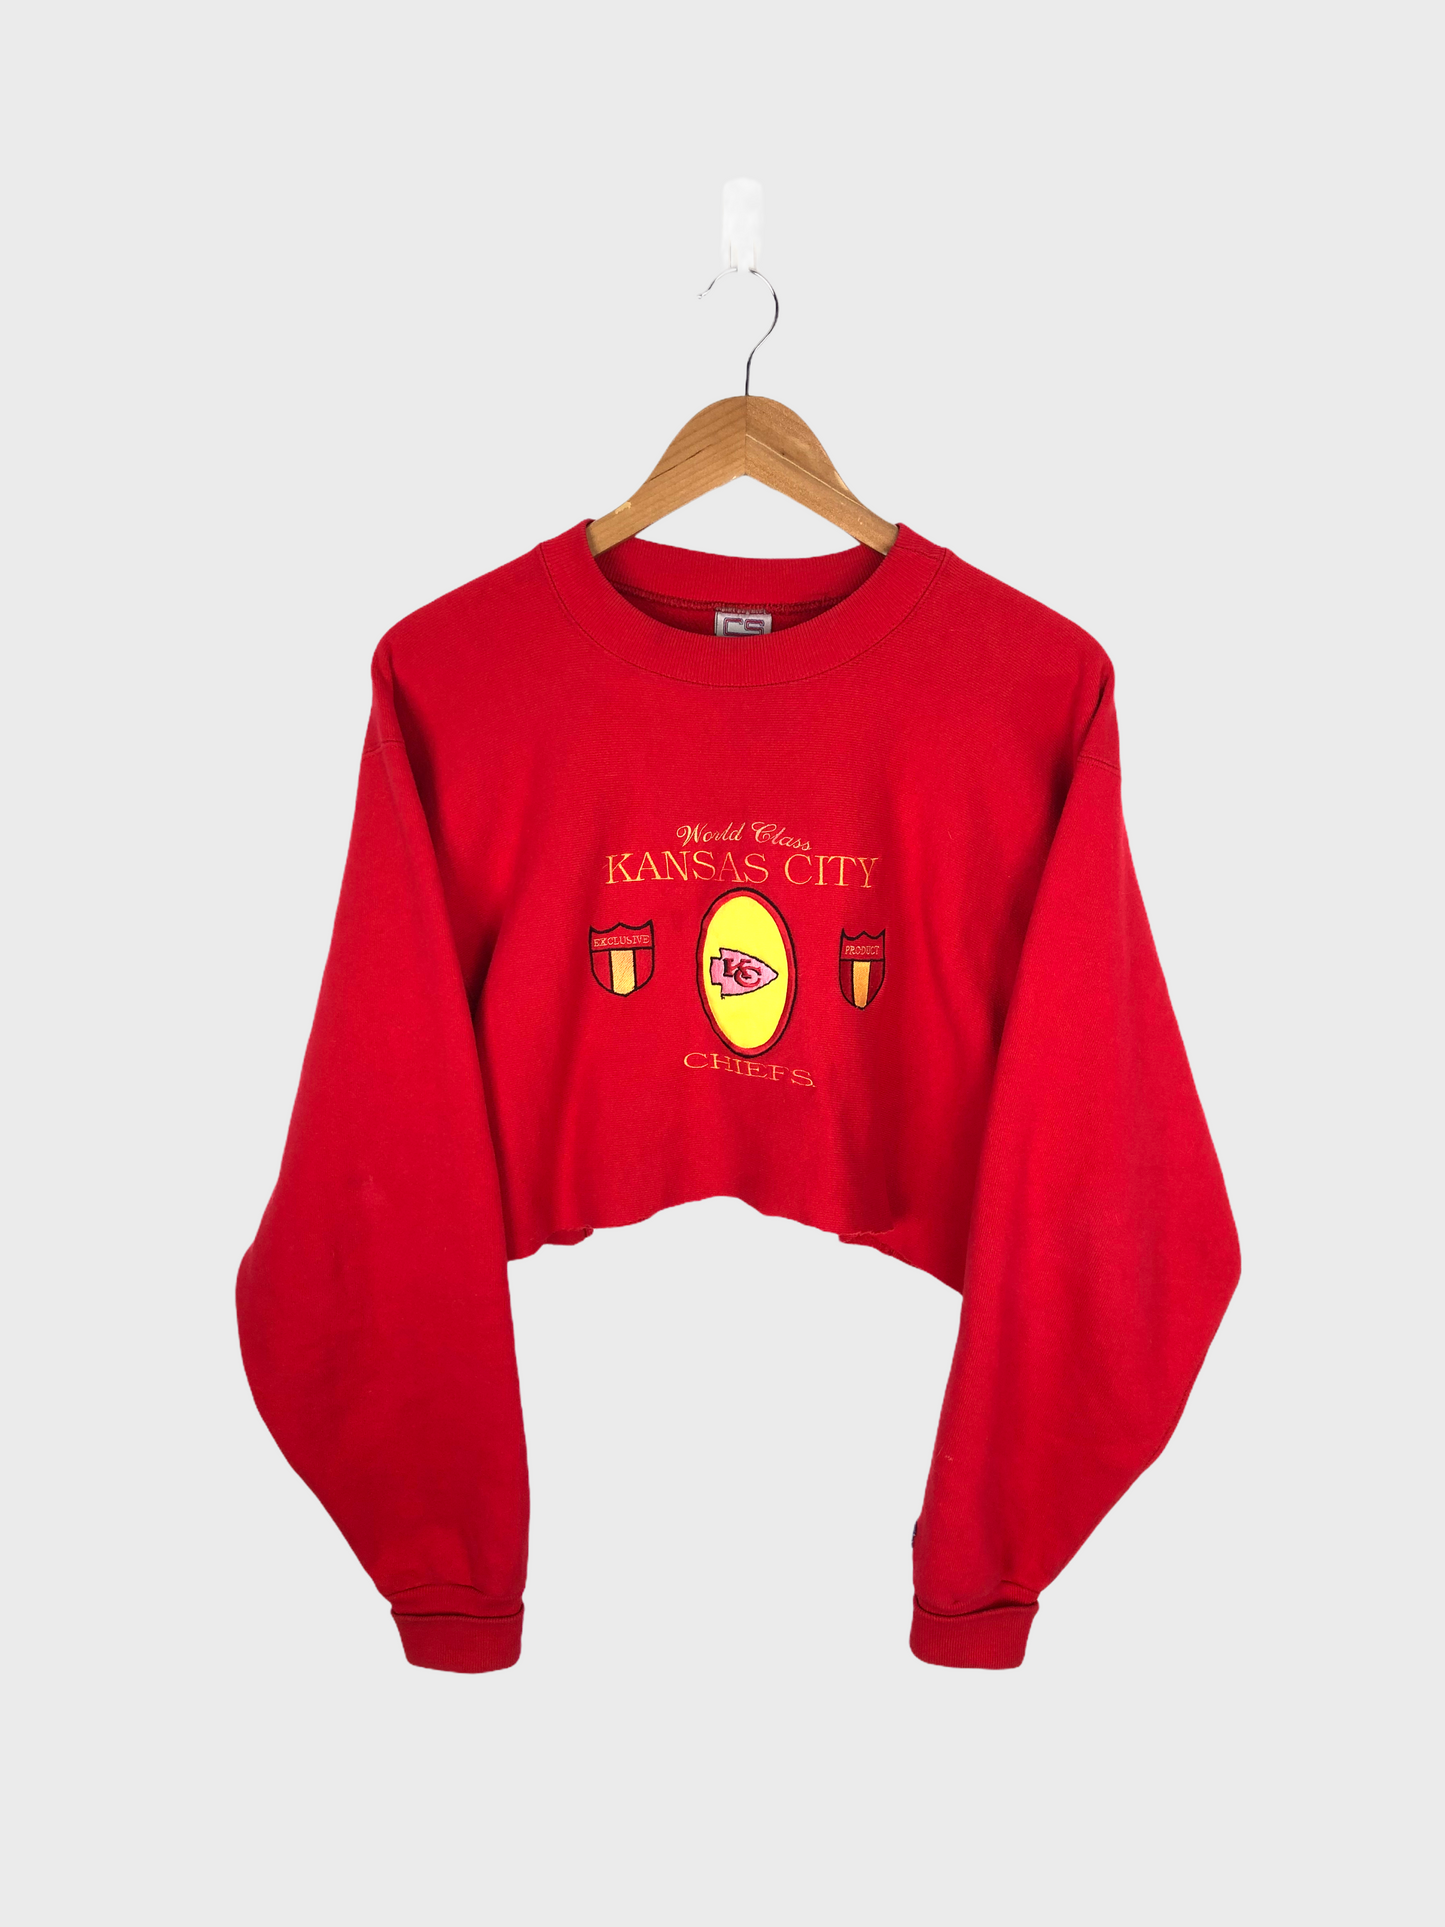 Kansas Chiefs Embroidered Cropped Vintage Sweatshirt Size 12